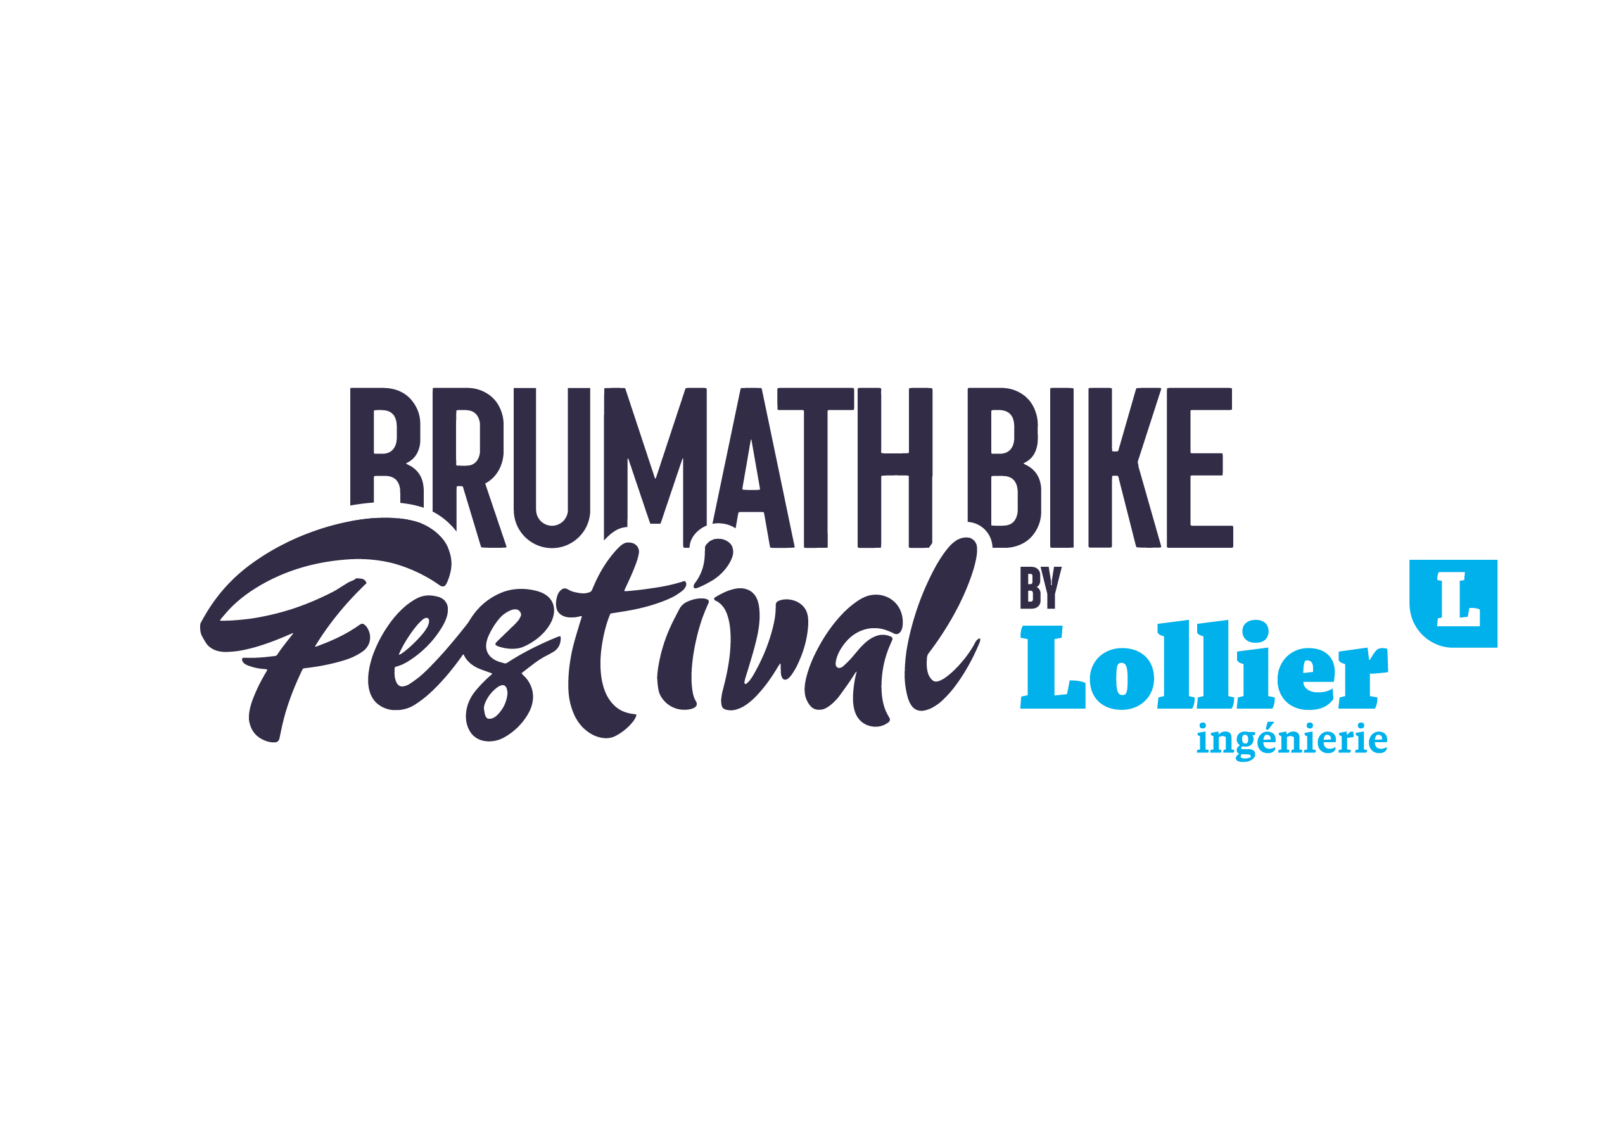 Brumath Bike Festival